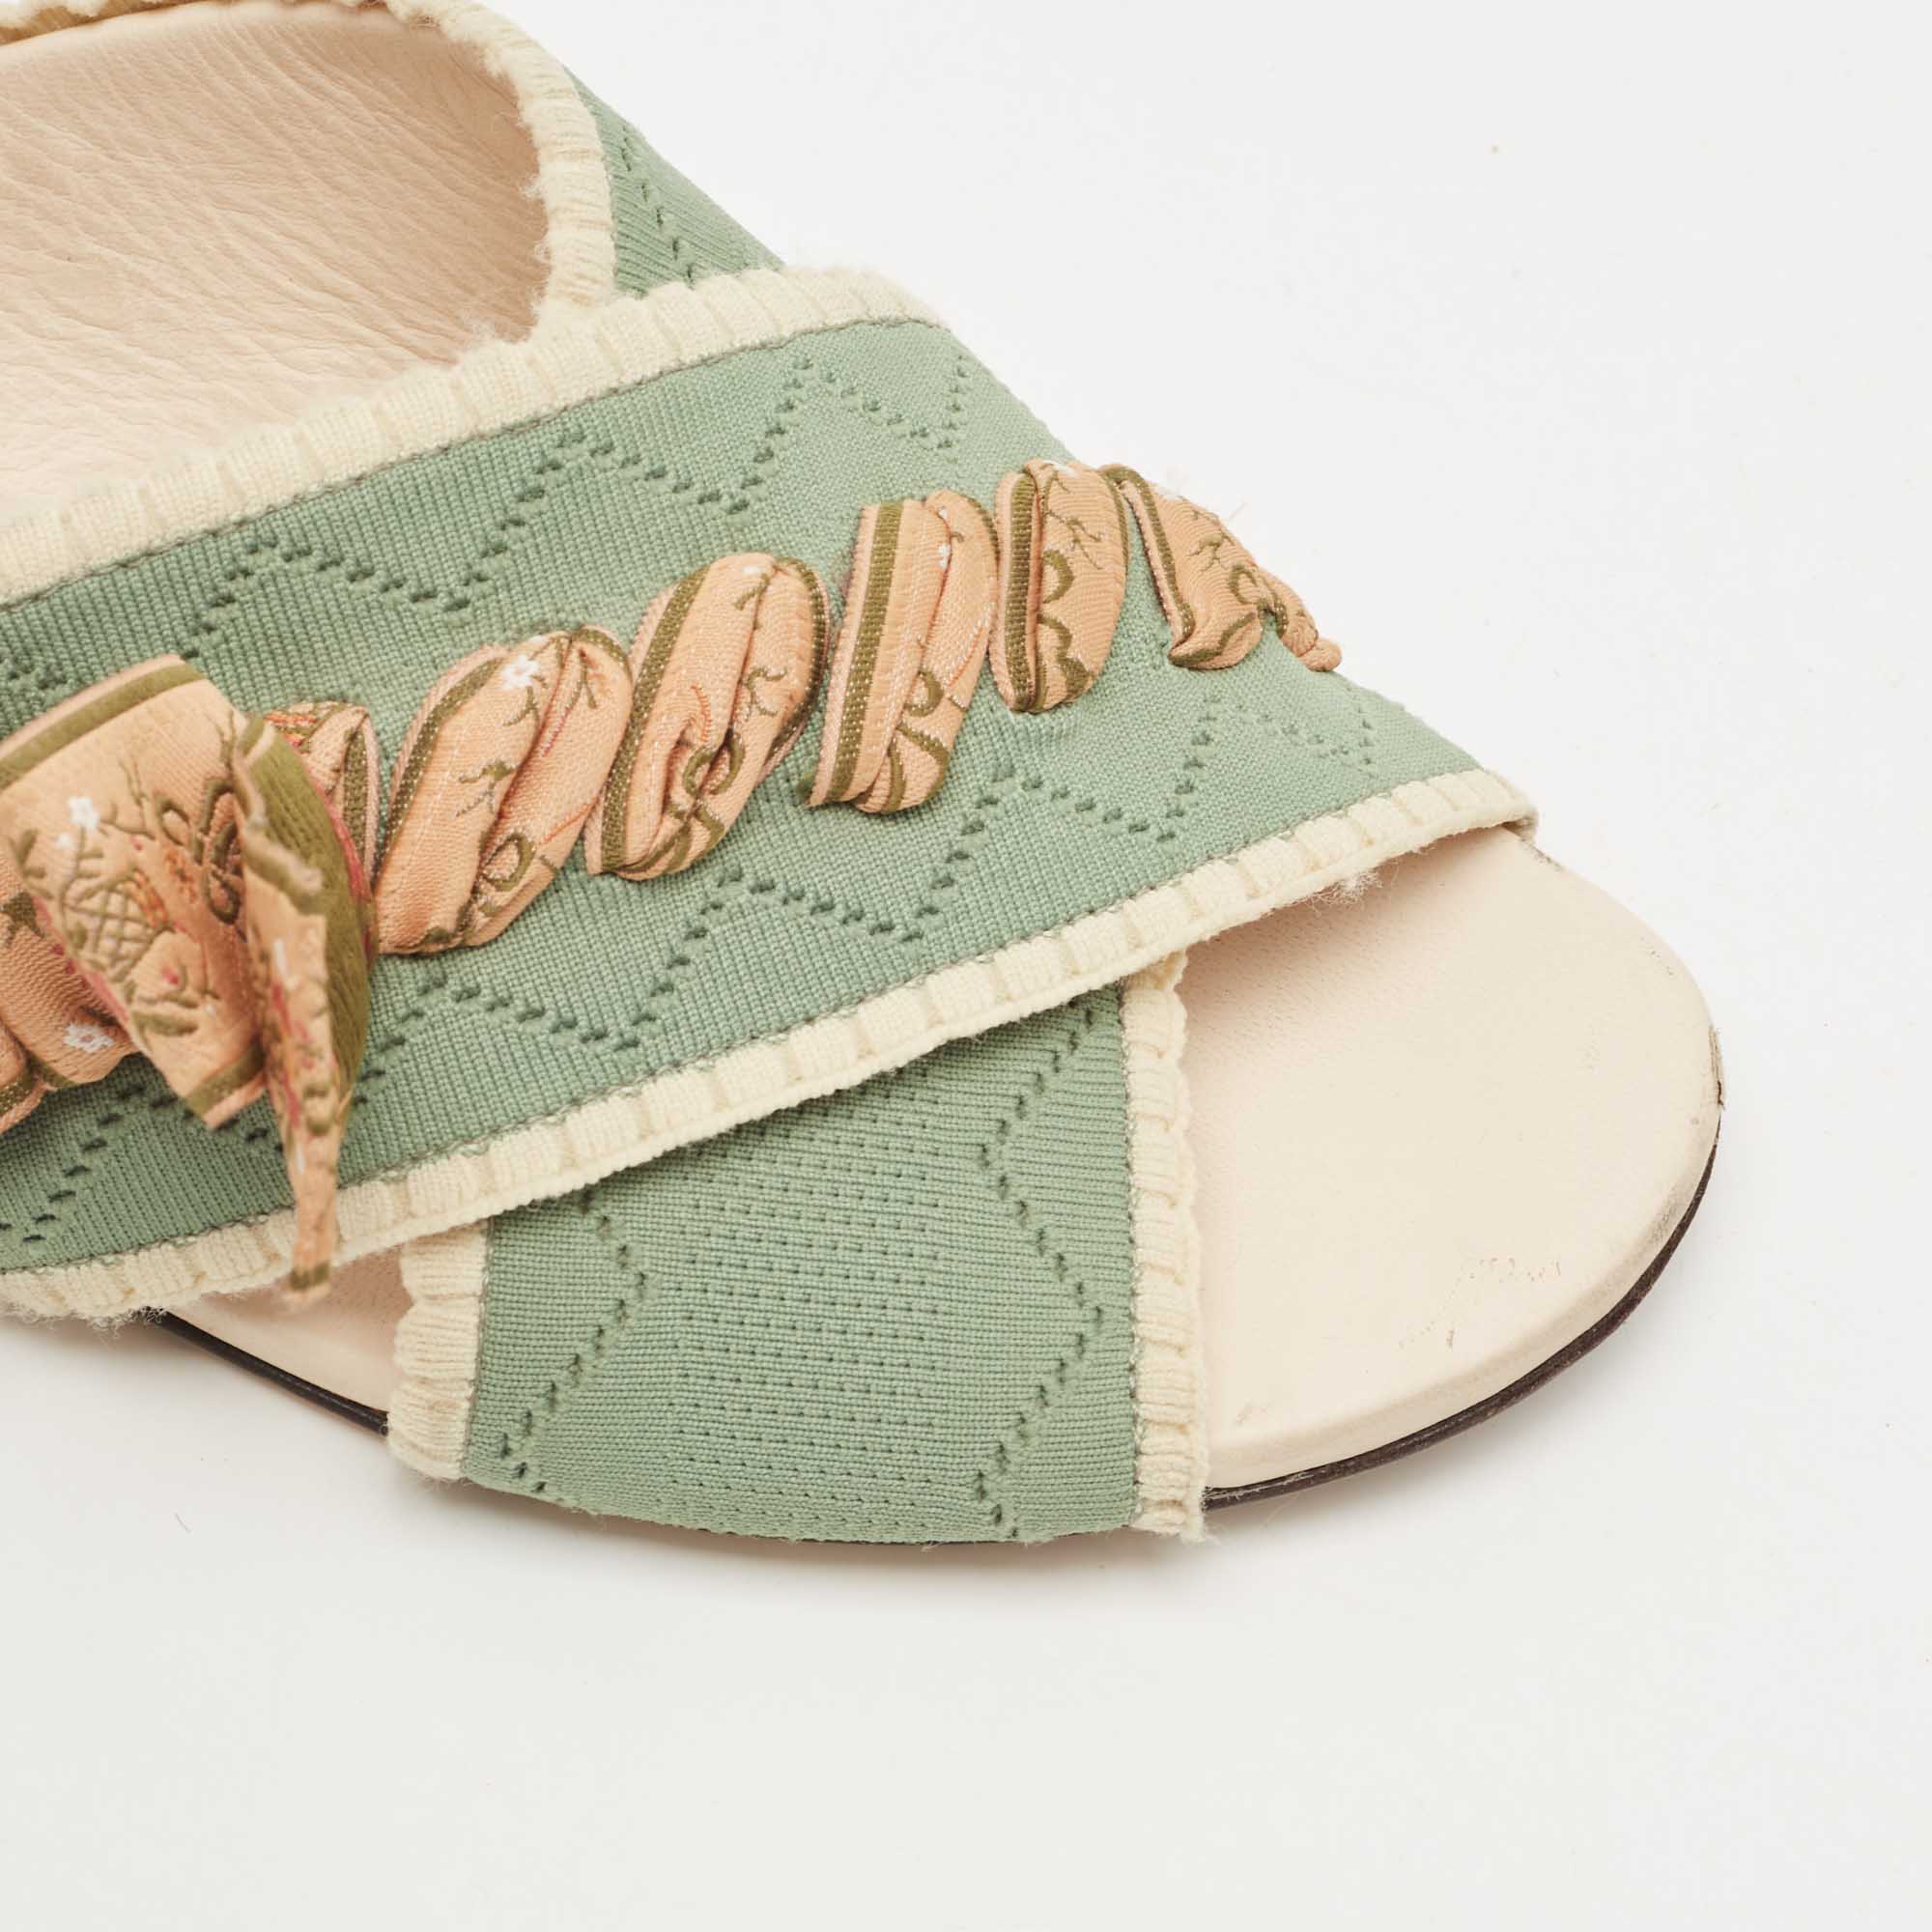 Fendi Beige/Green Fabric Crisscross Bow Flat Slides Size 38